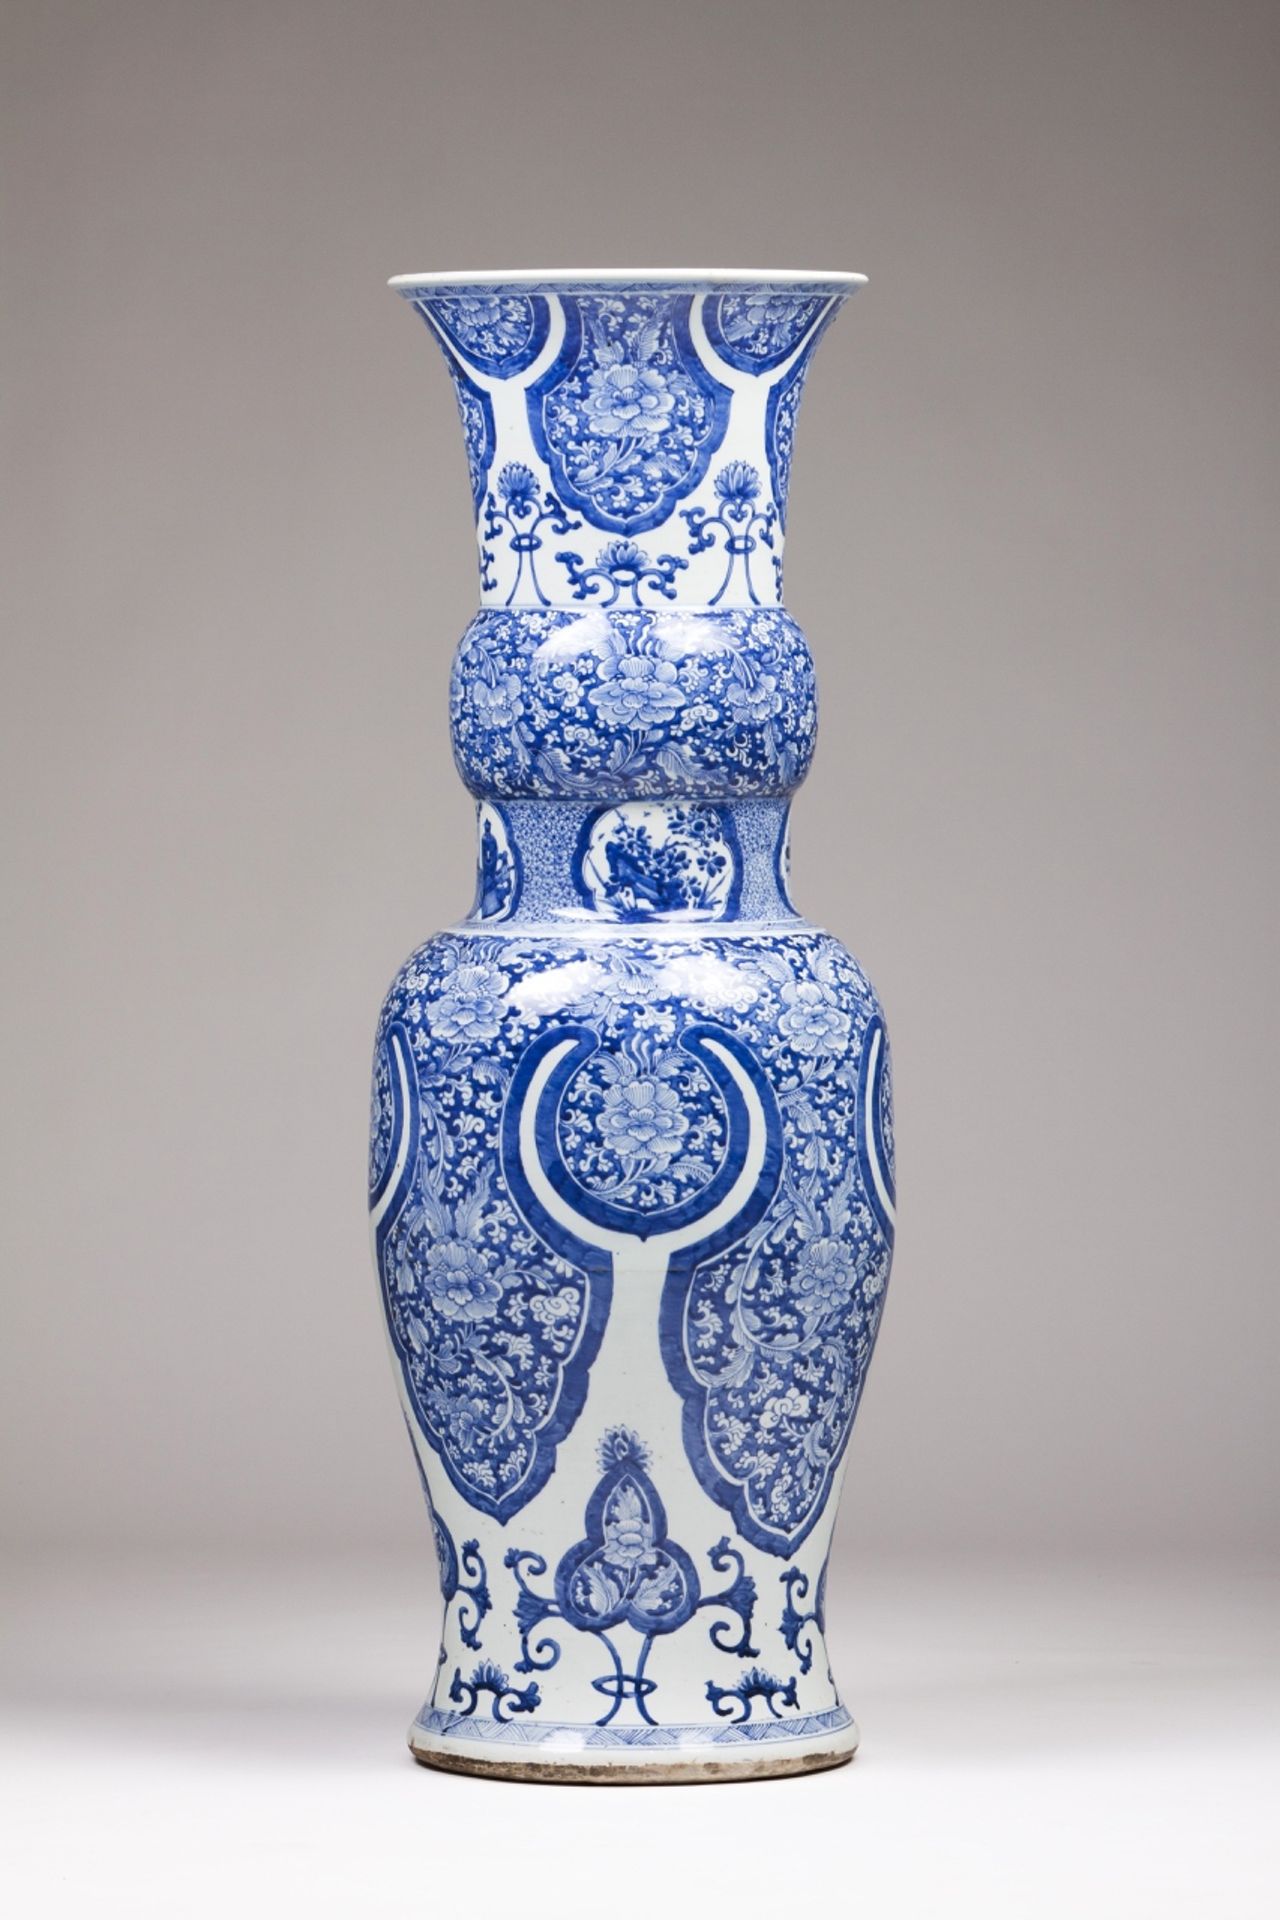 Rare Kangxi double neck vase
Chinese porcelain
Richly decorated in underglaze blue with knife-